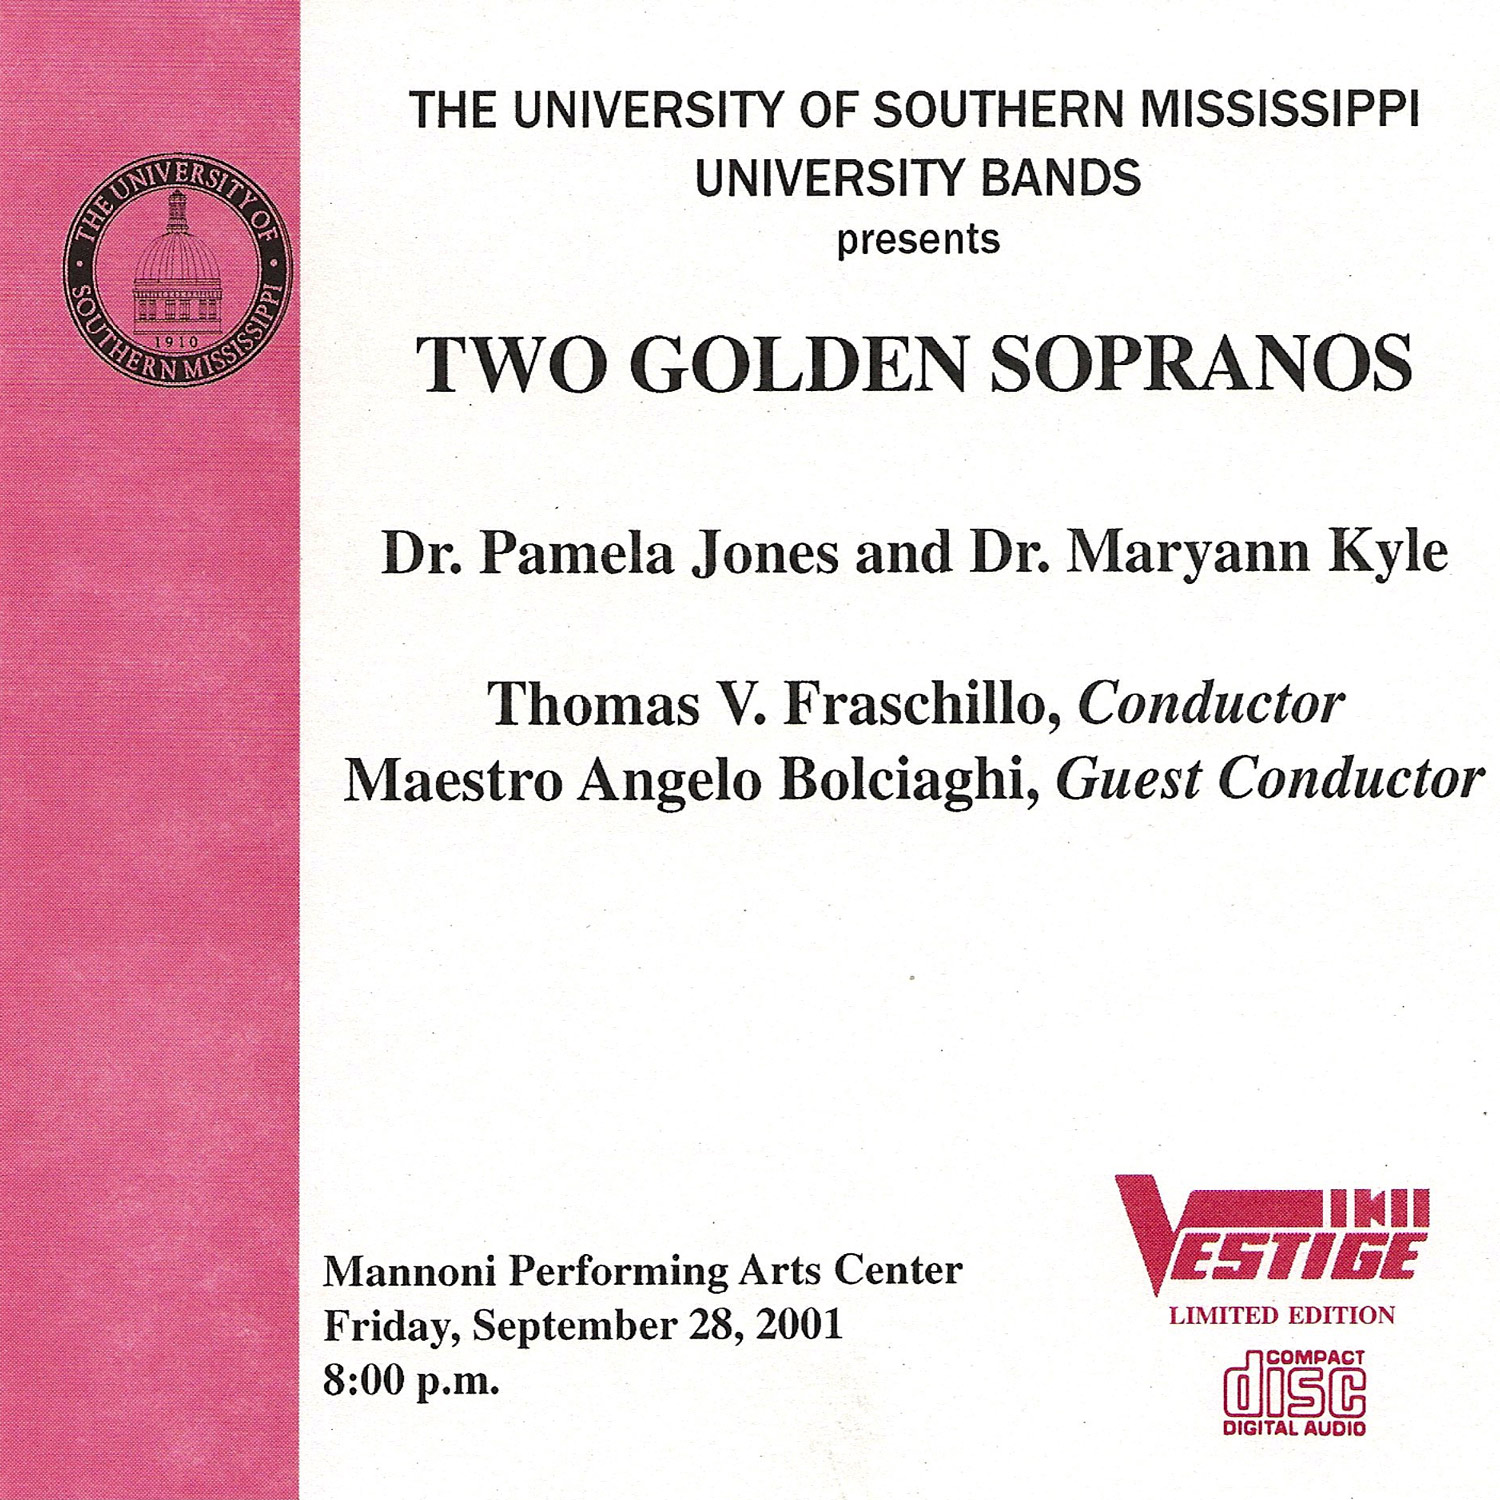 Two Golden Sopranos